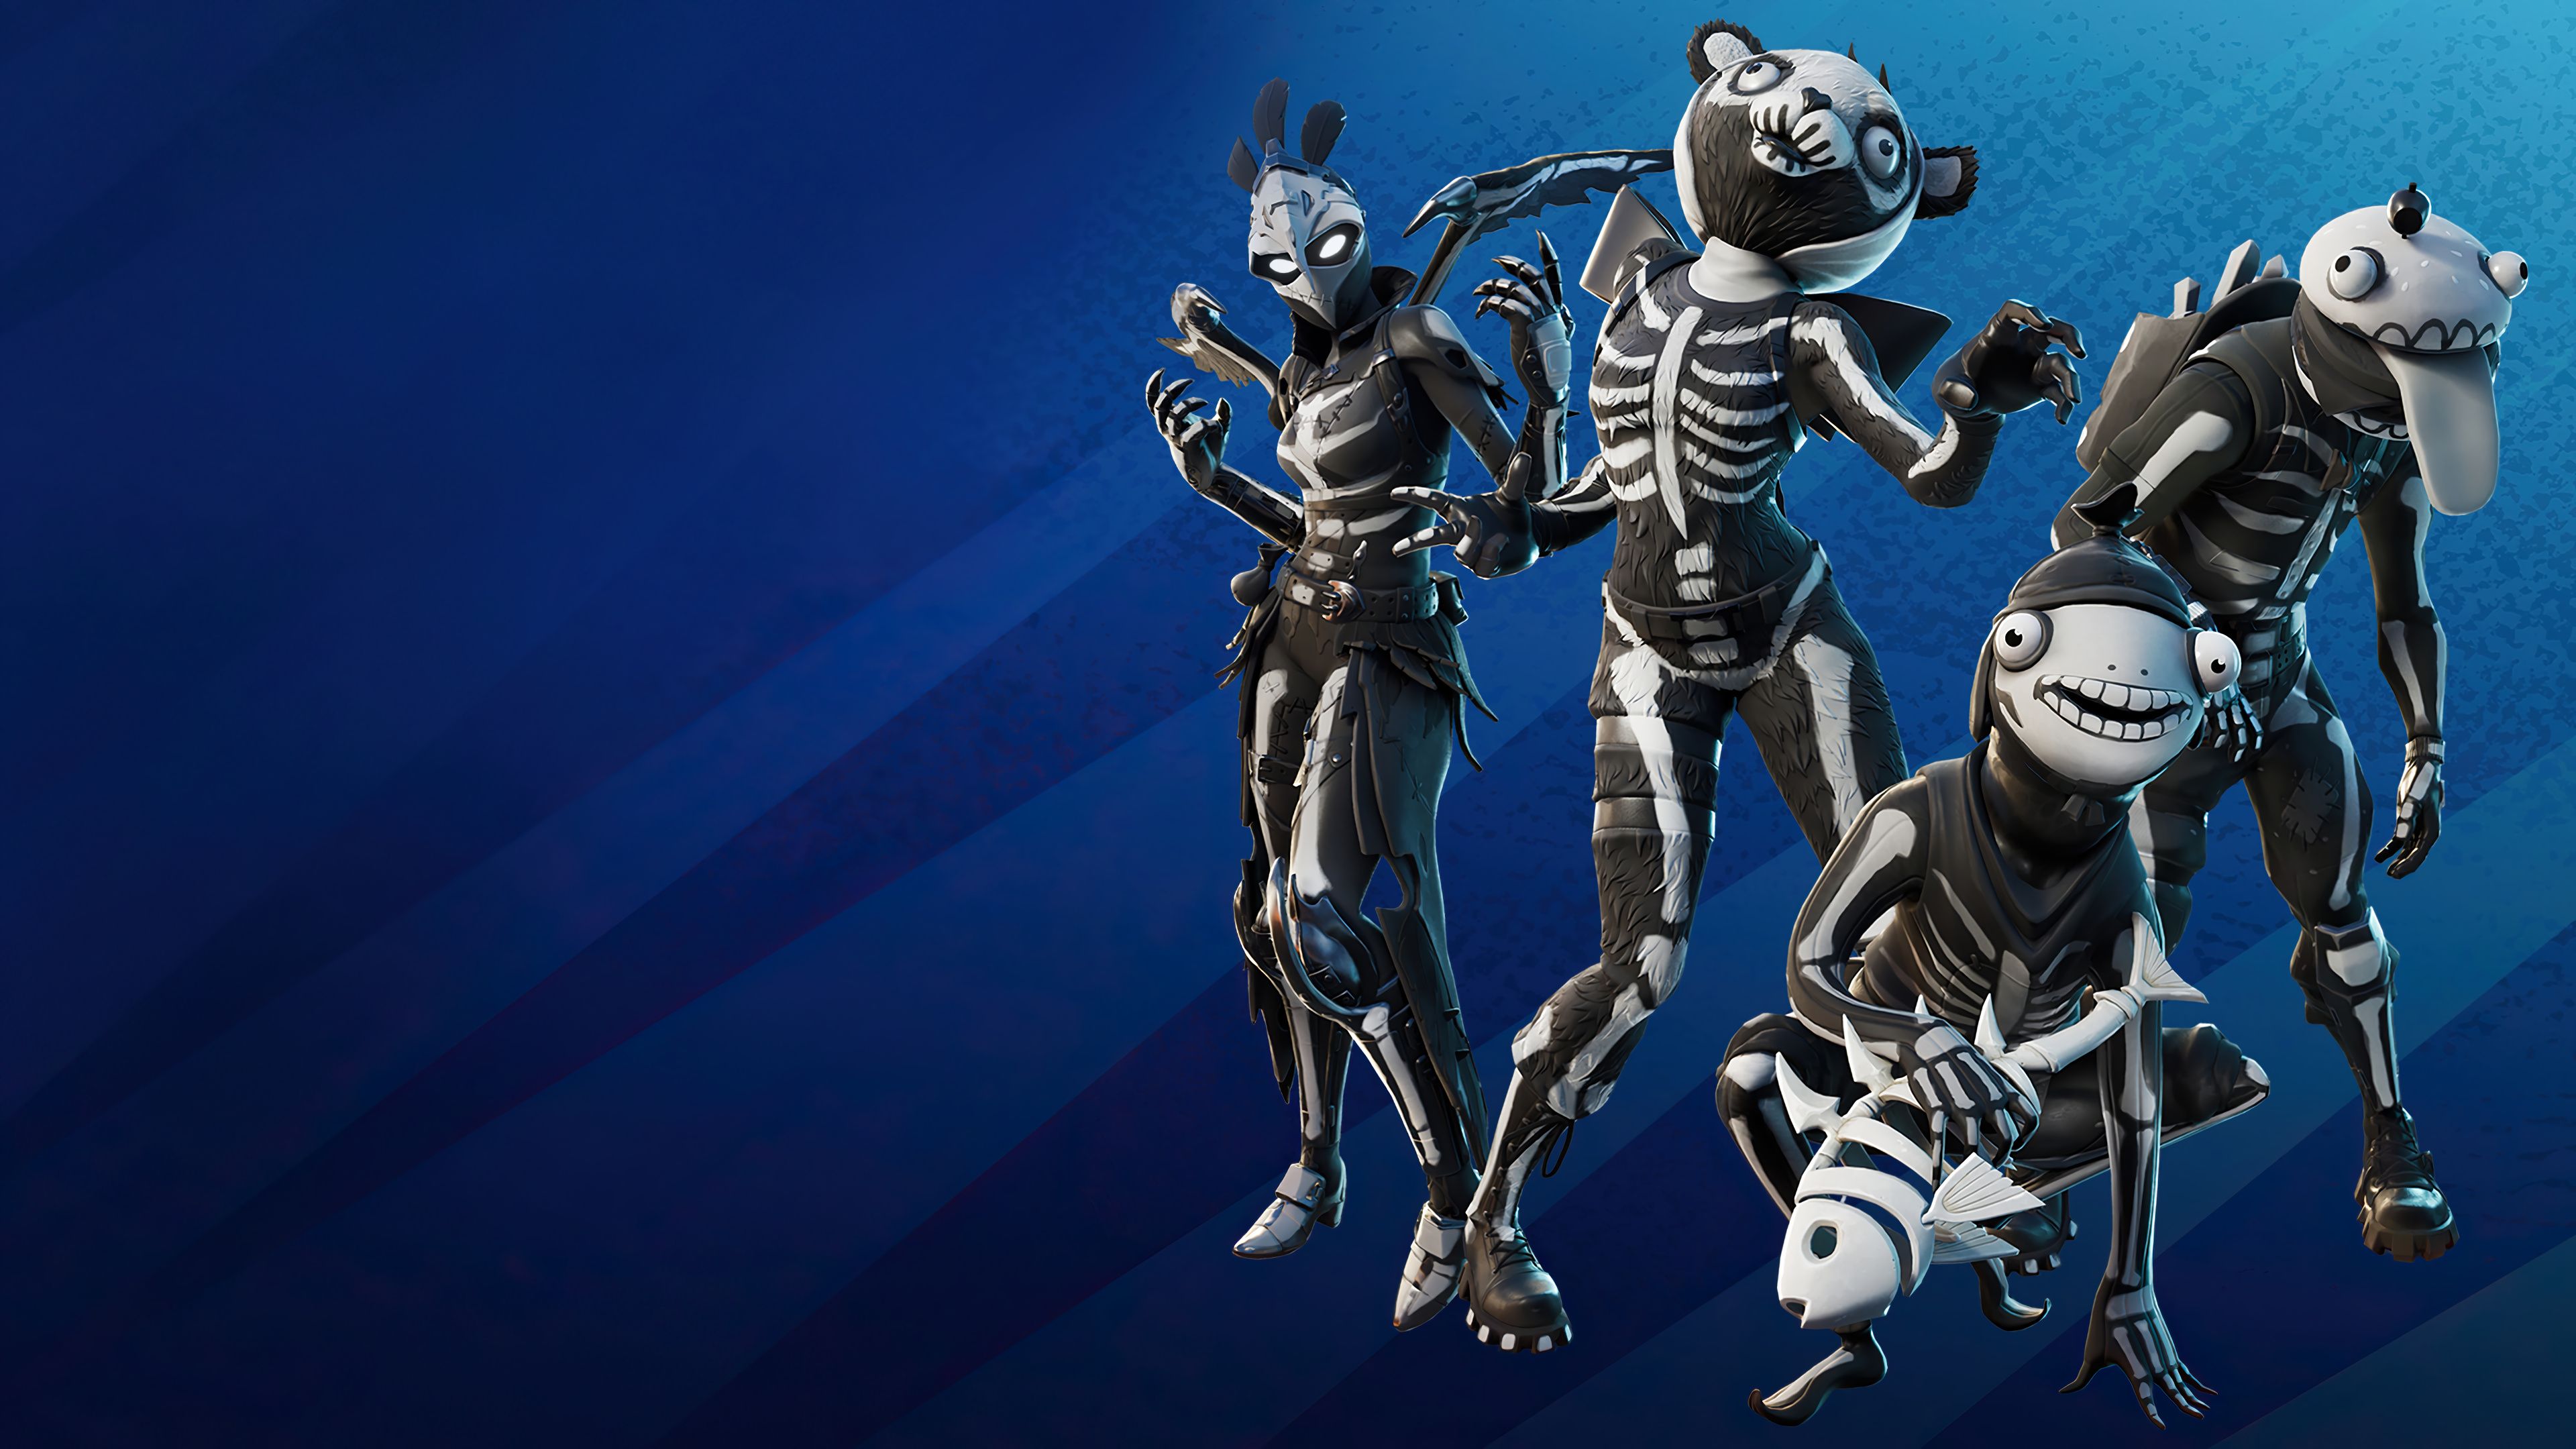 Fortnite Skull squad pack skins Halloween outfits Wallpaper 4k Ultra HD